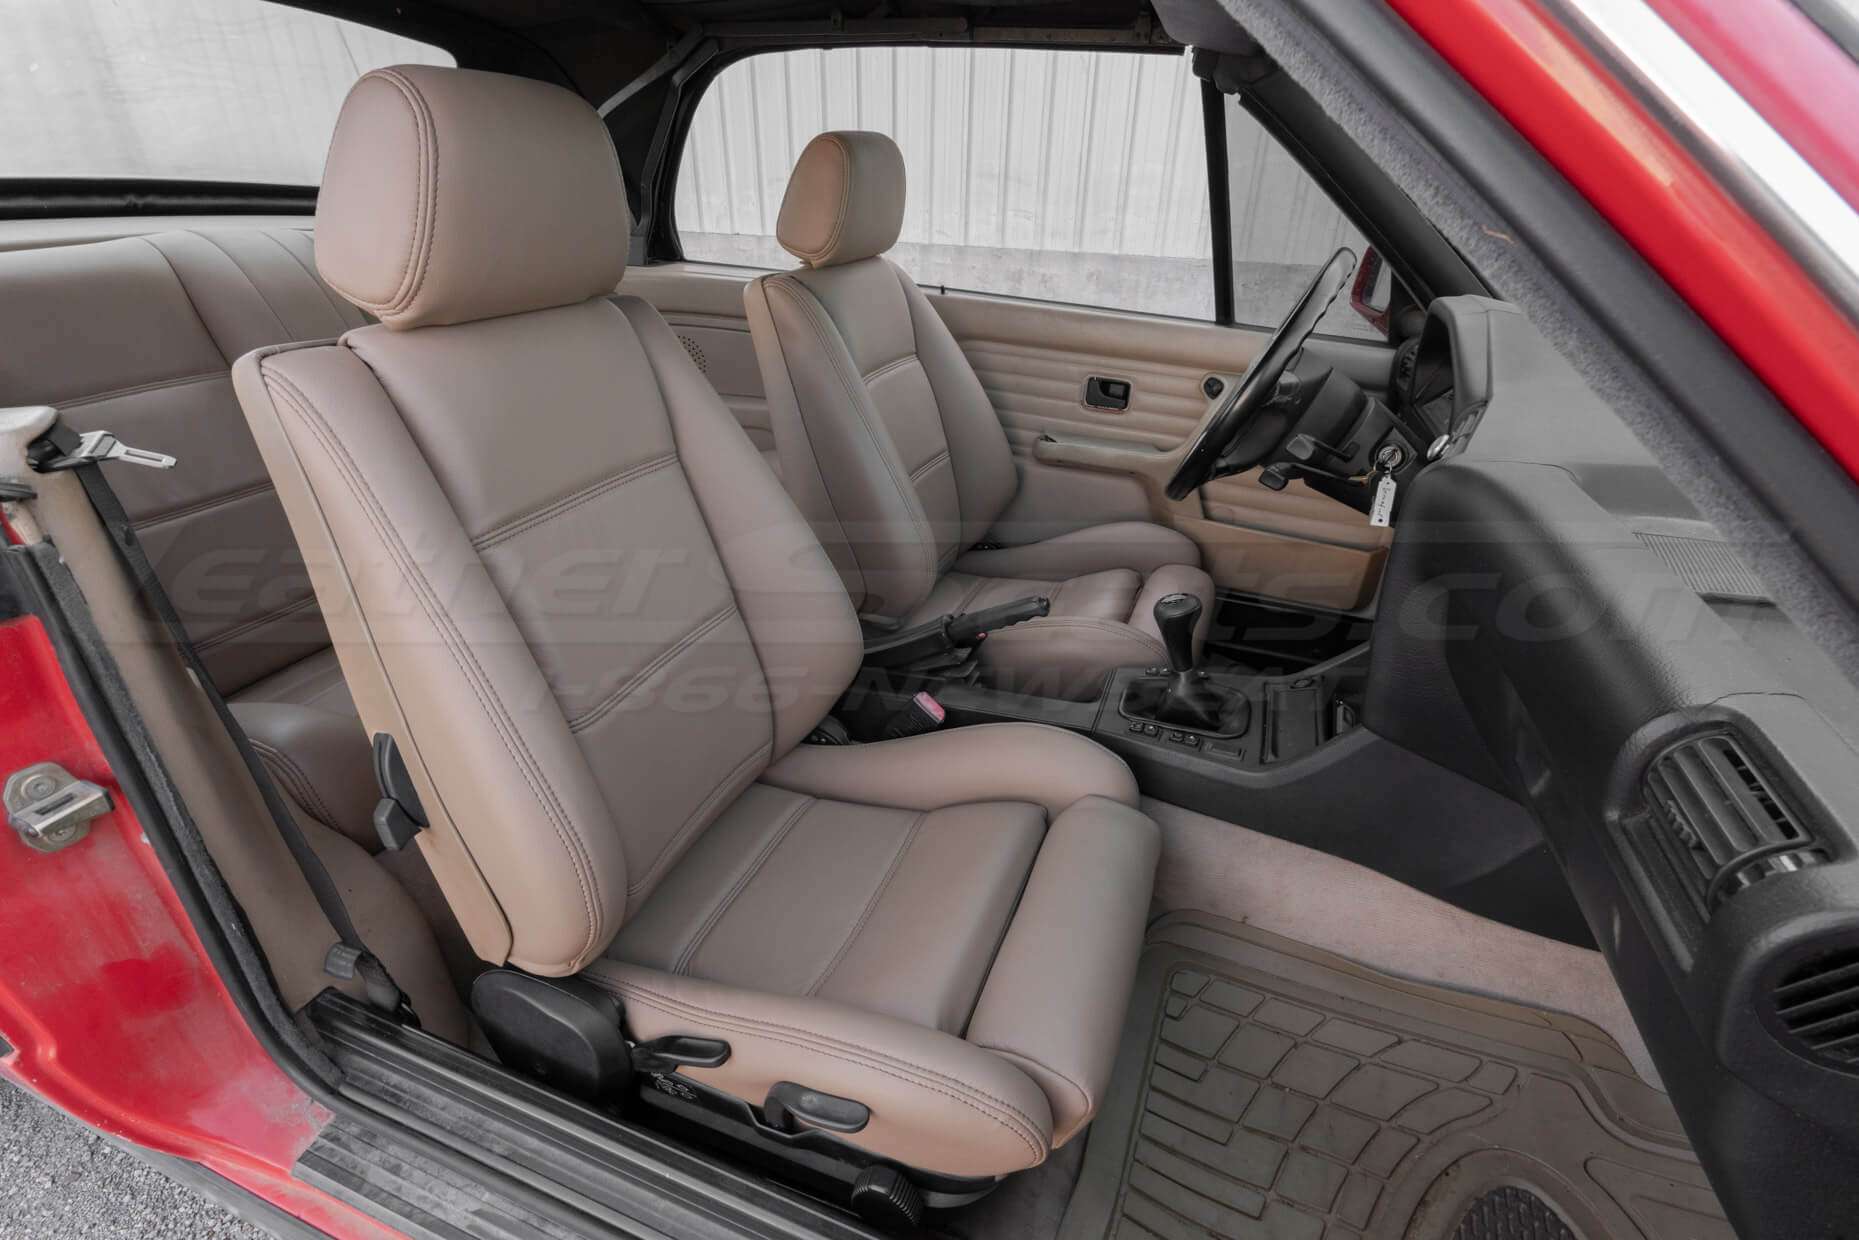 BMW Nutmeg leather seats installed - Front passenger